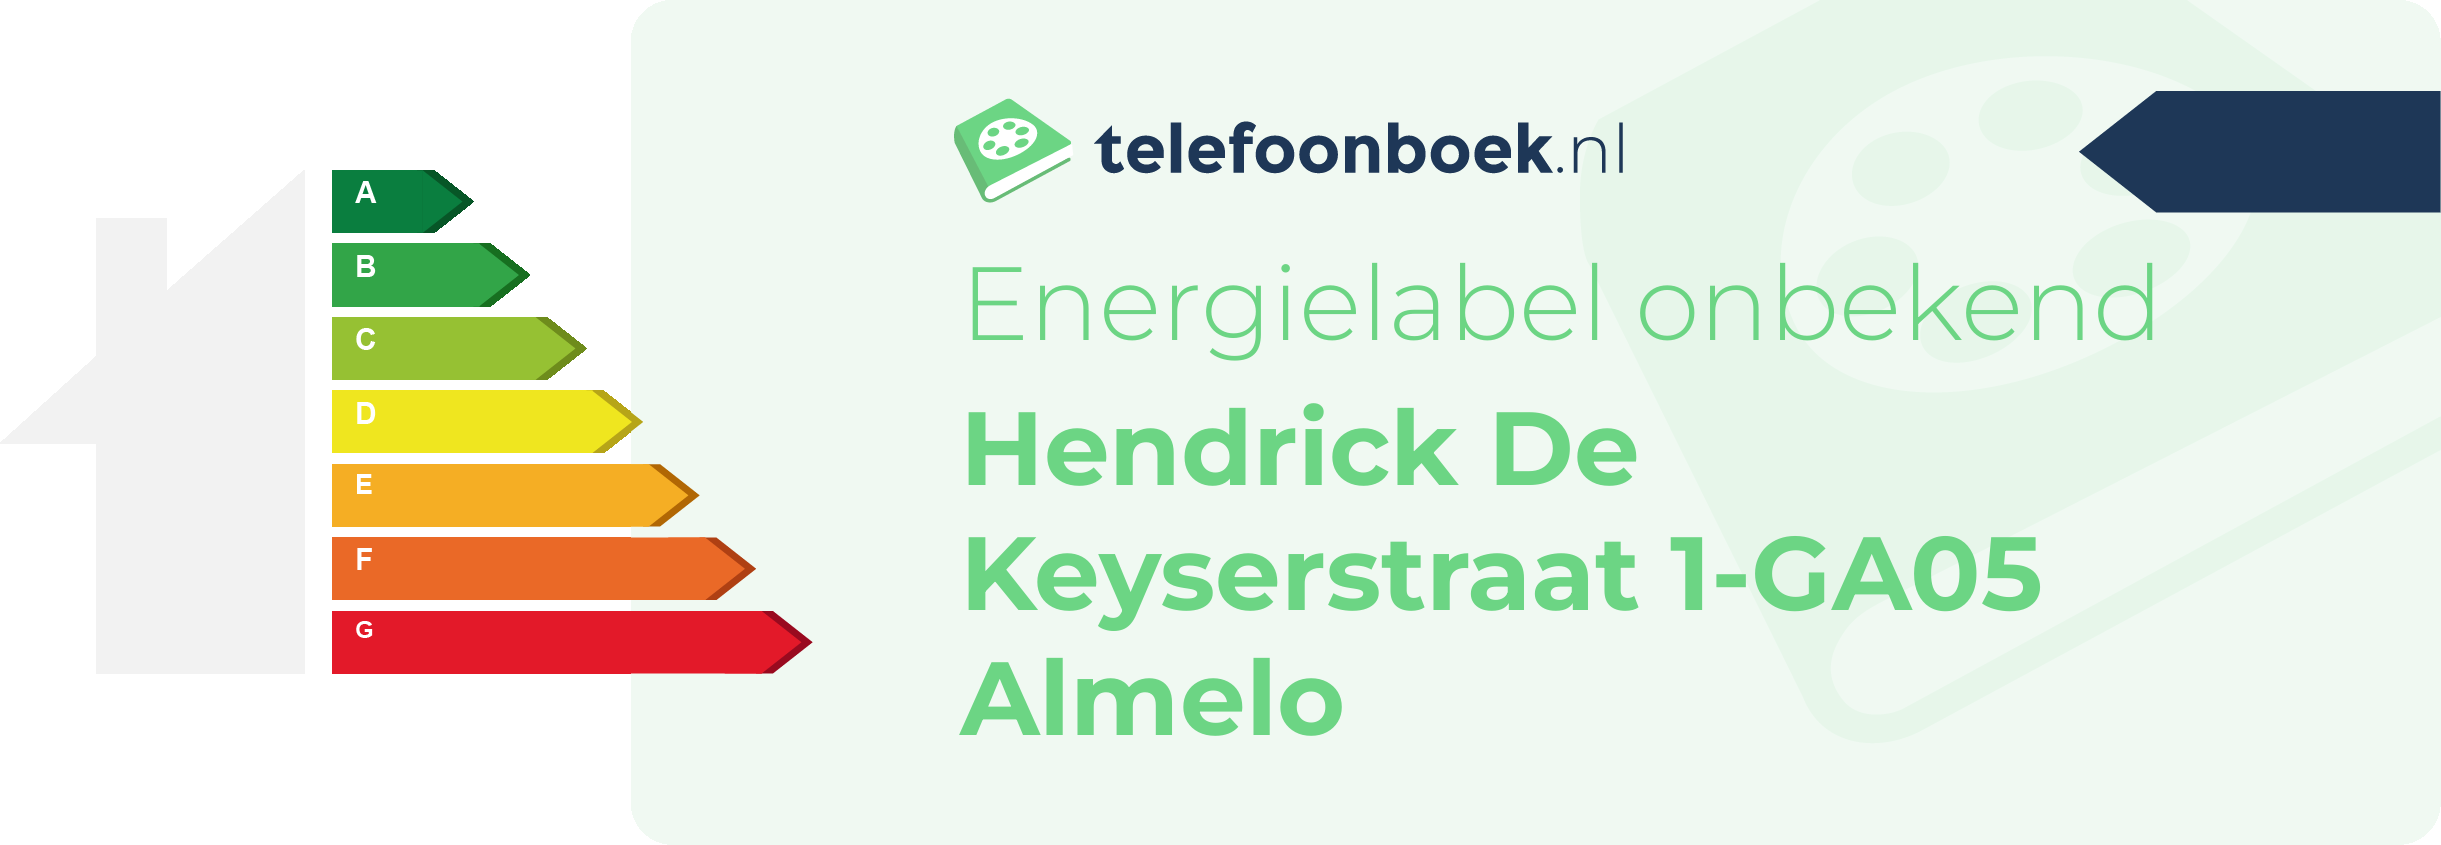 Energielabel Hendrick De Keyserstraat 1-GA05 Almelo